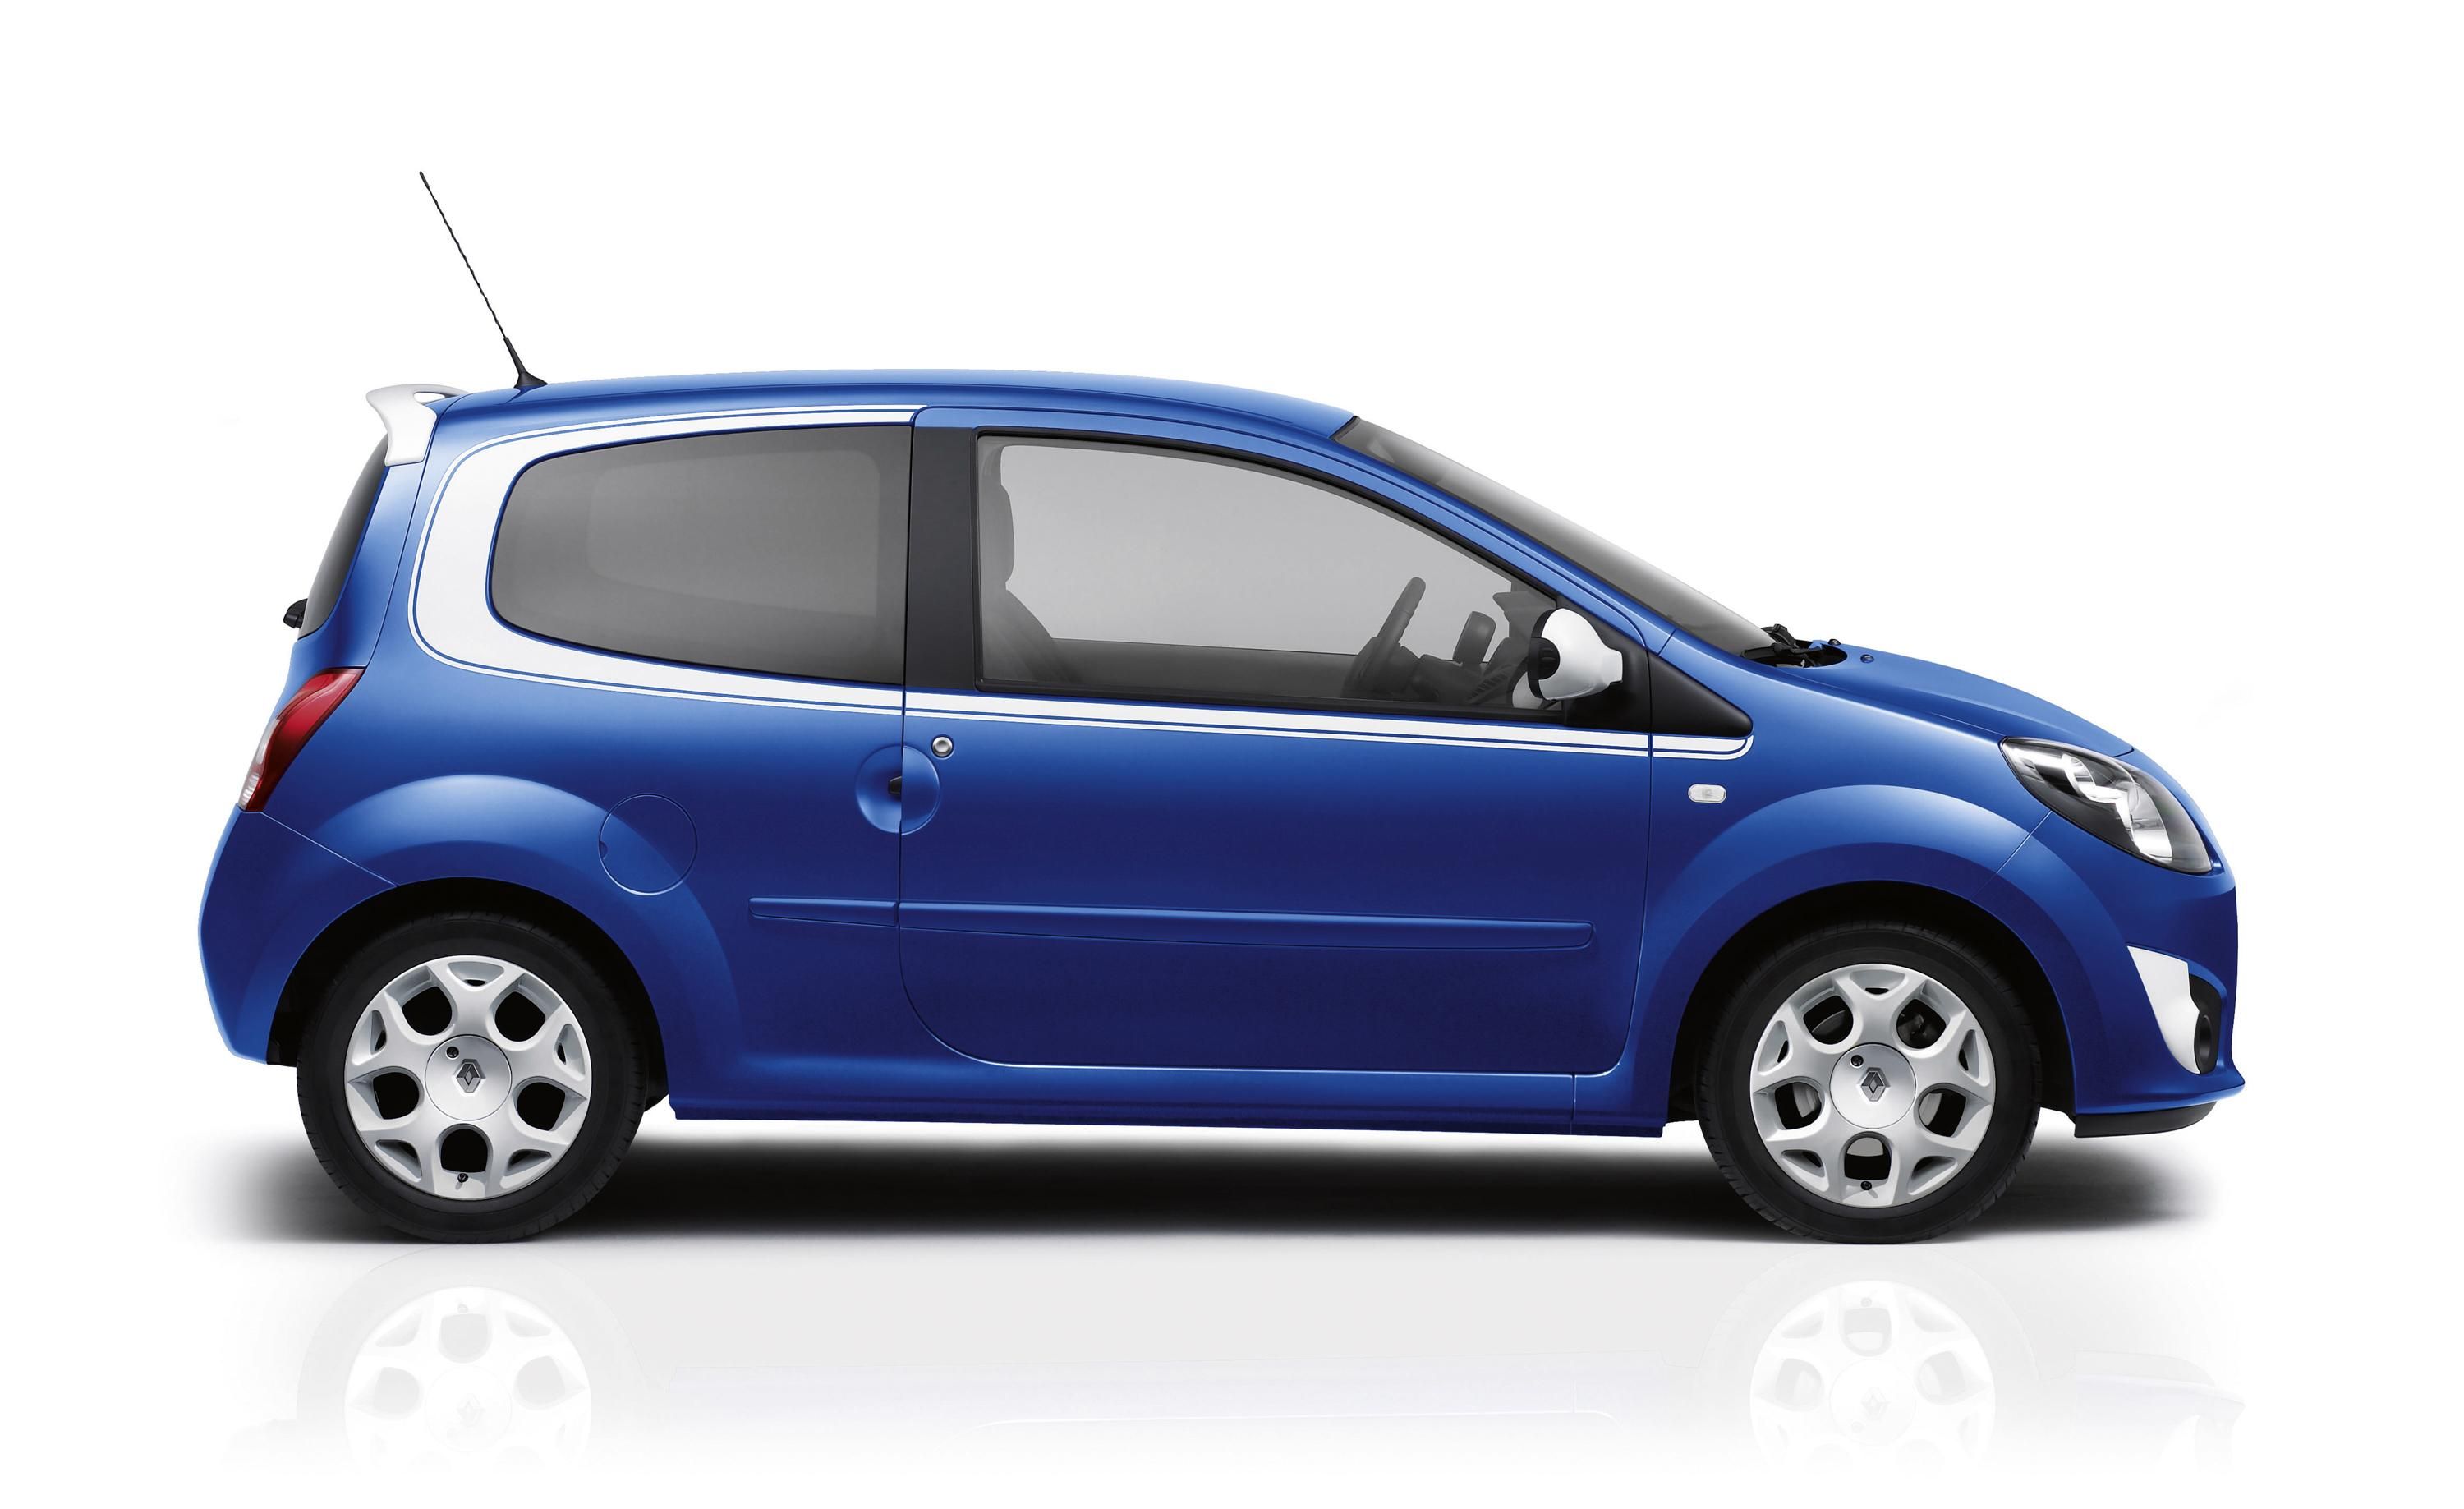 2009 Renault Twingo Customization Options